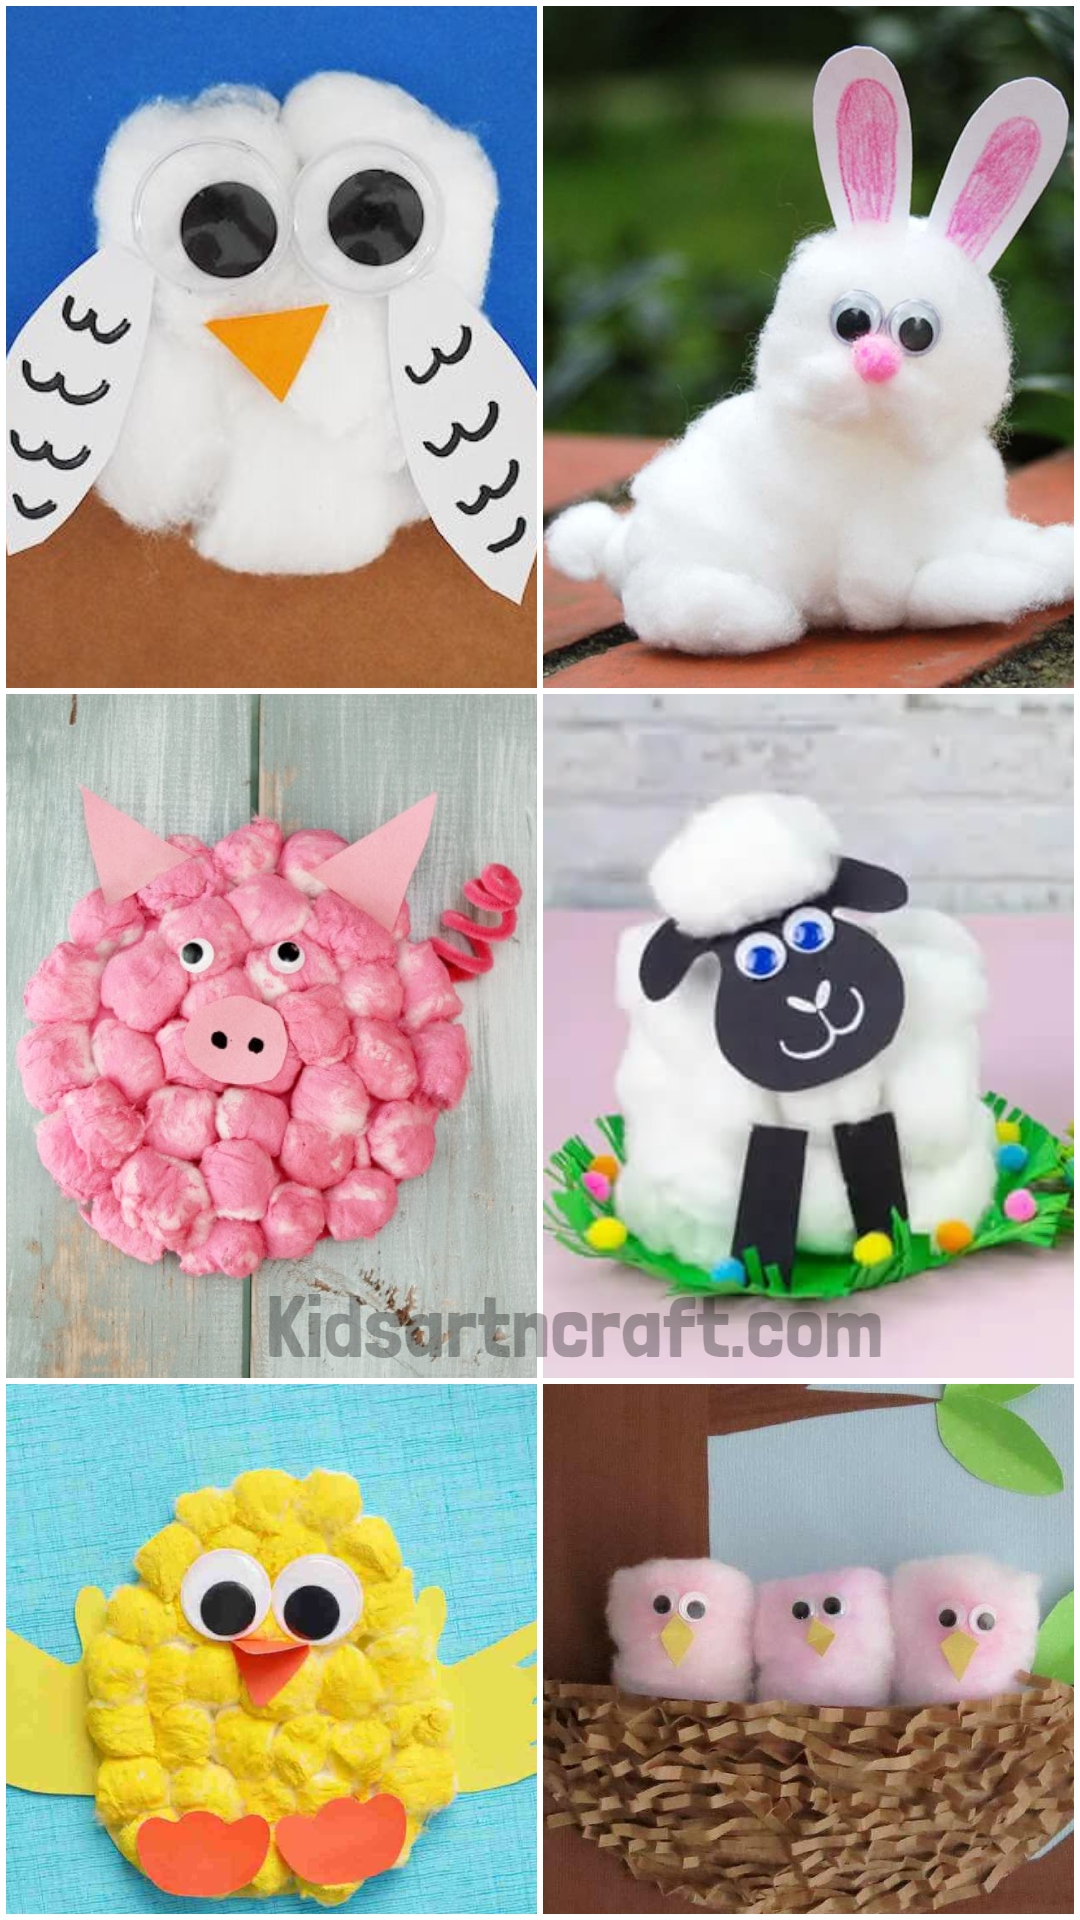 16 Cotton Ball crafts ideas  crafts, preschool crafts, cotton ball crafts